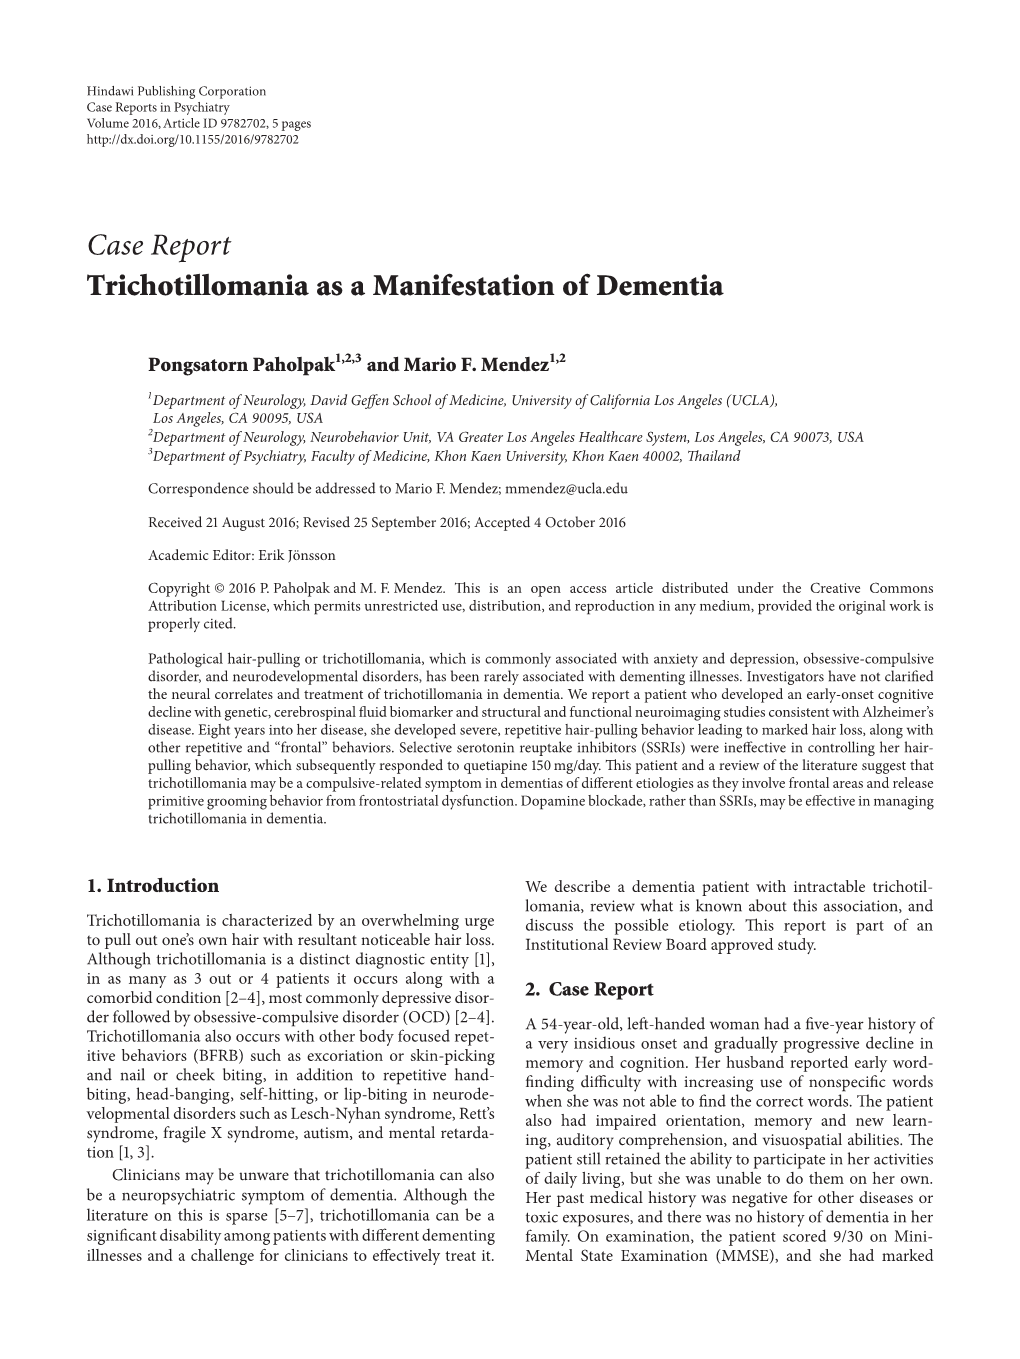 Case Report Trichotillomania As a Manifestation of Dementia